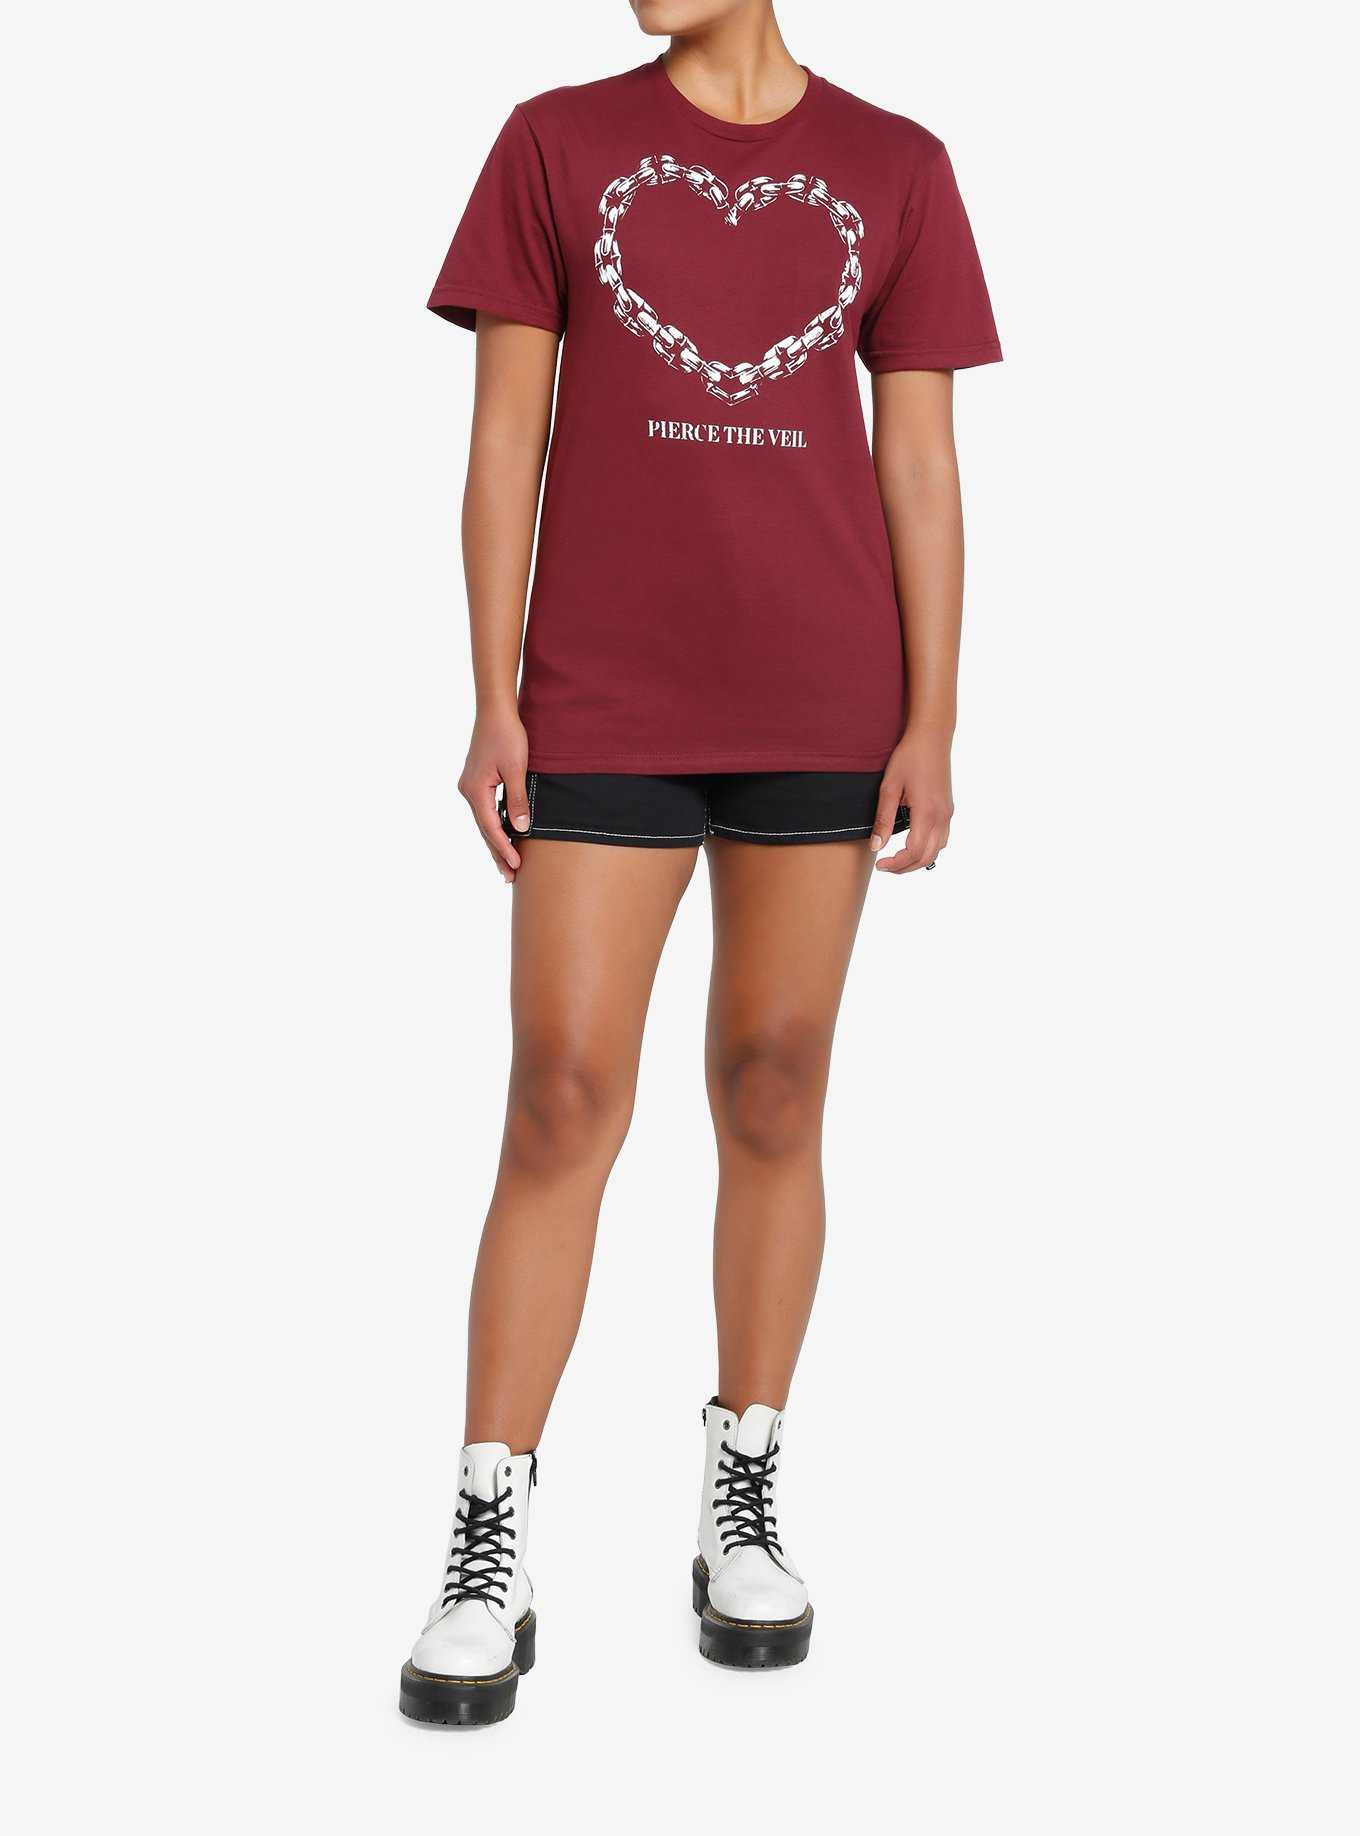 Pierce The Veil Chain Heart Burgundy Boyfriend Fit Girls T-Shirt, , hi-res